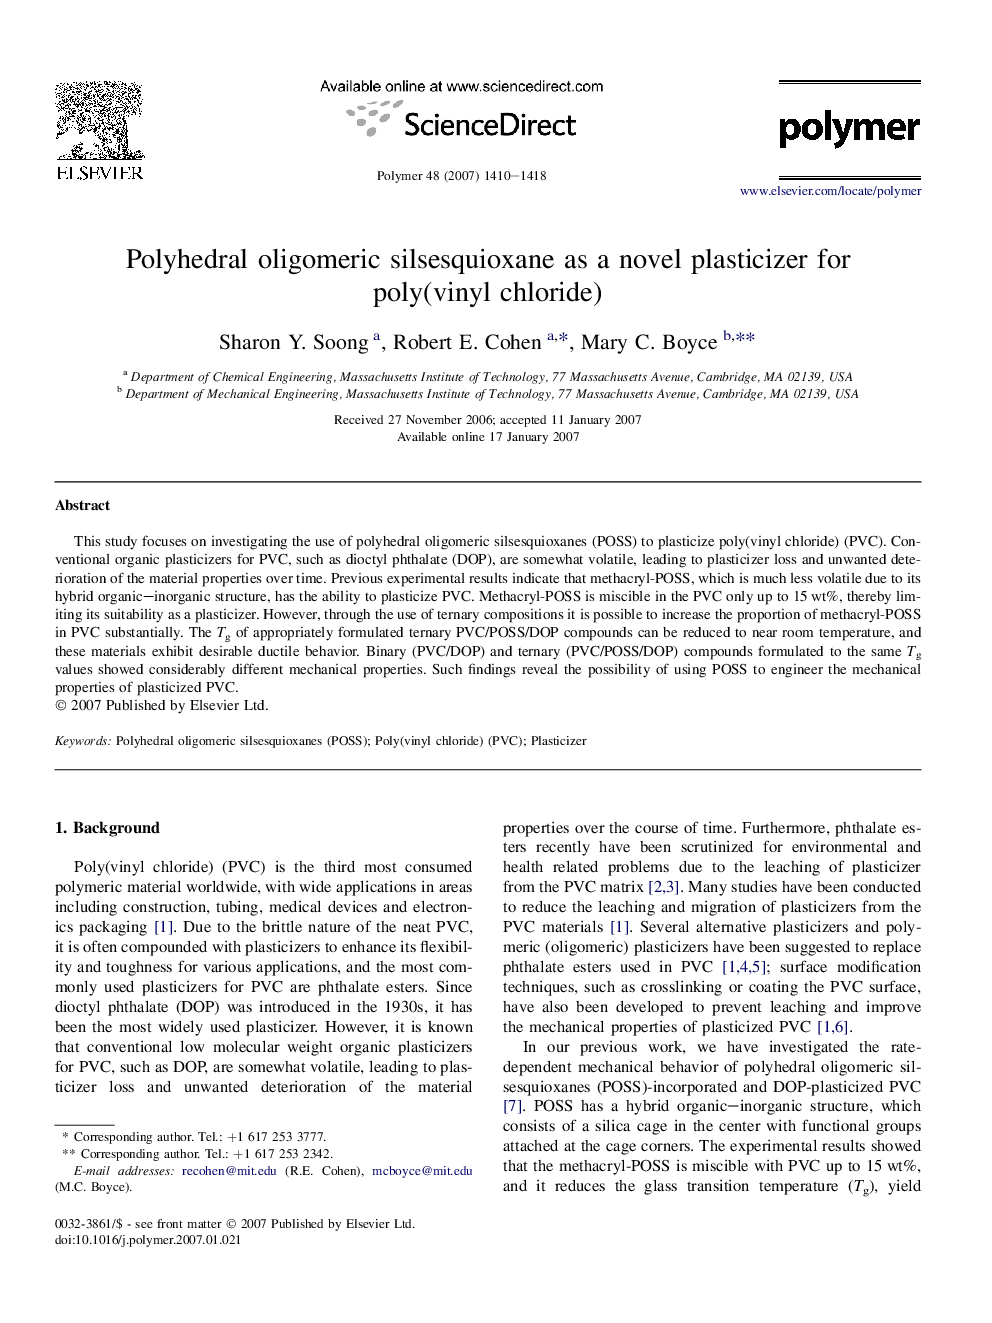 Polyhedral oligomeric silsesquioxane as a novel plasticizer for poly(vinyl chloride)